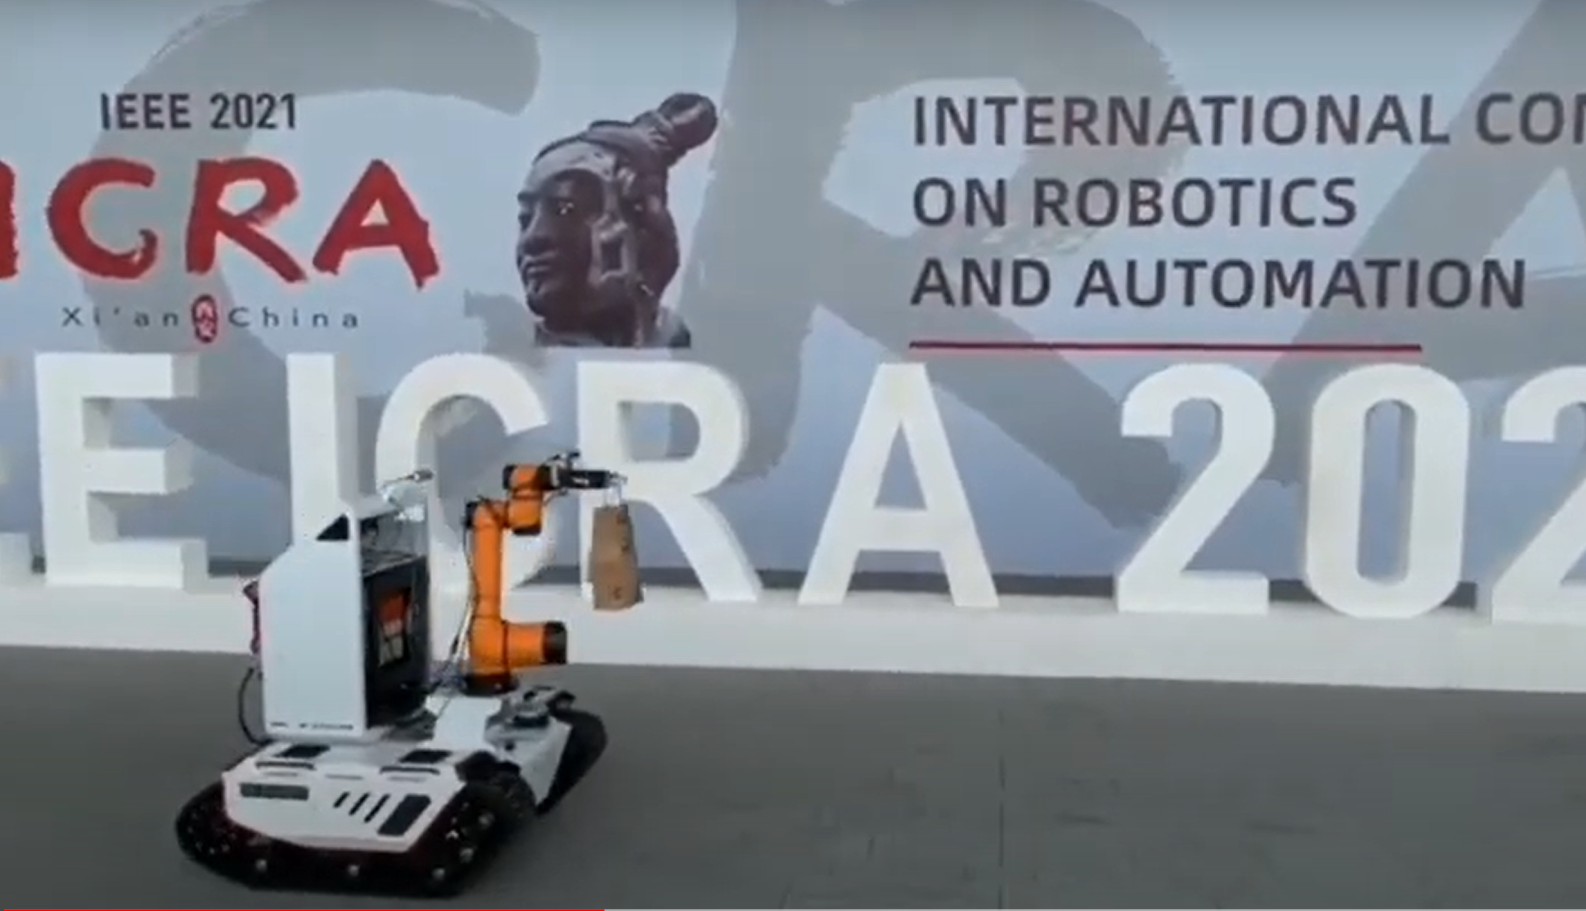 AgileX Mobile Collaborative Robot showed in ICRA 2021